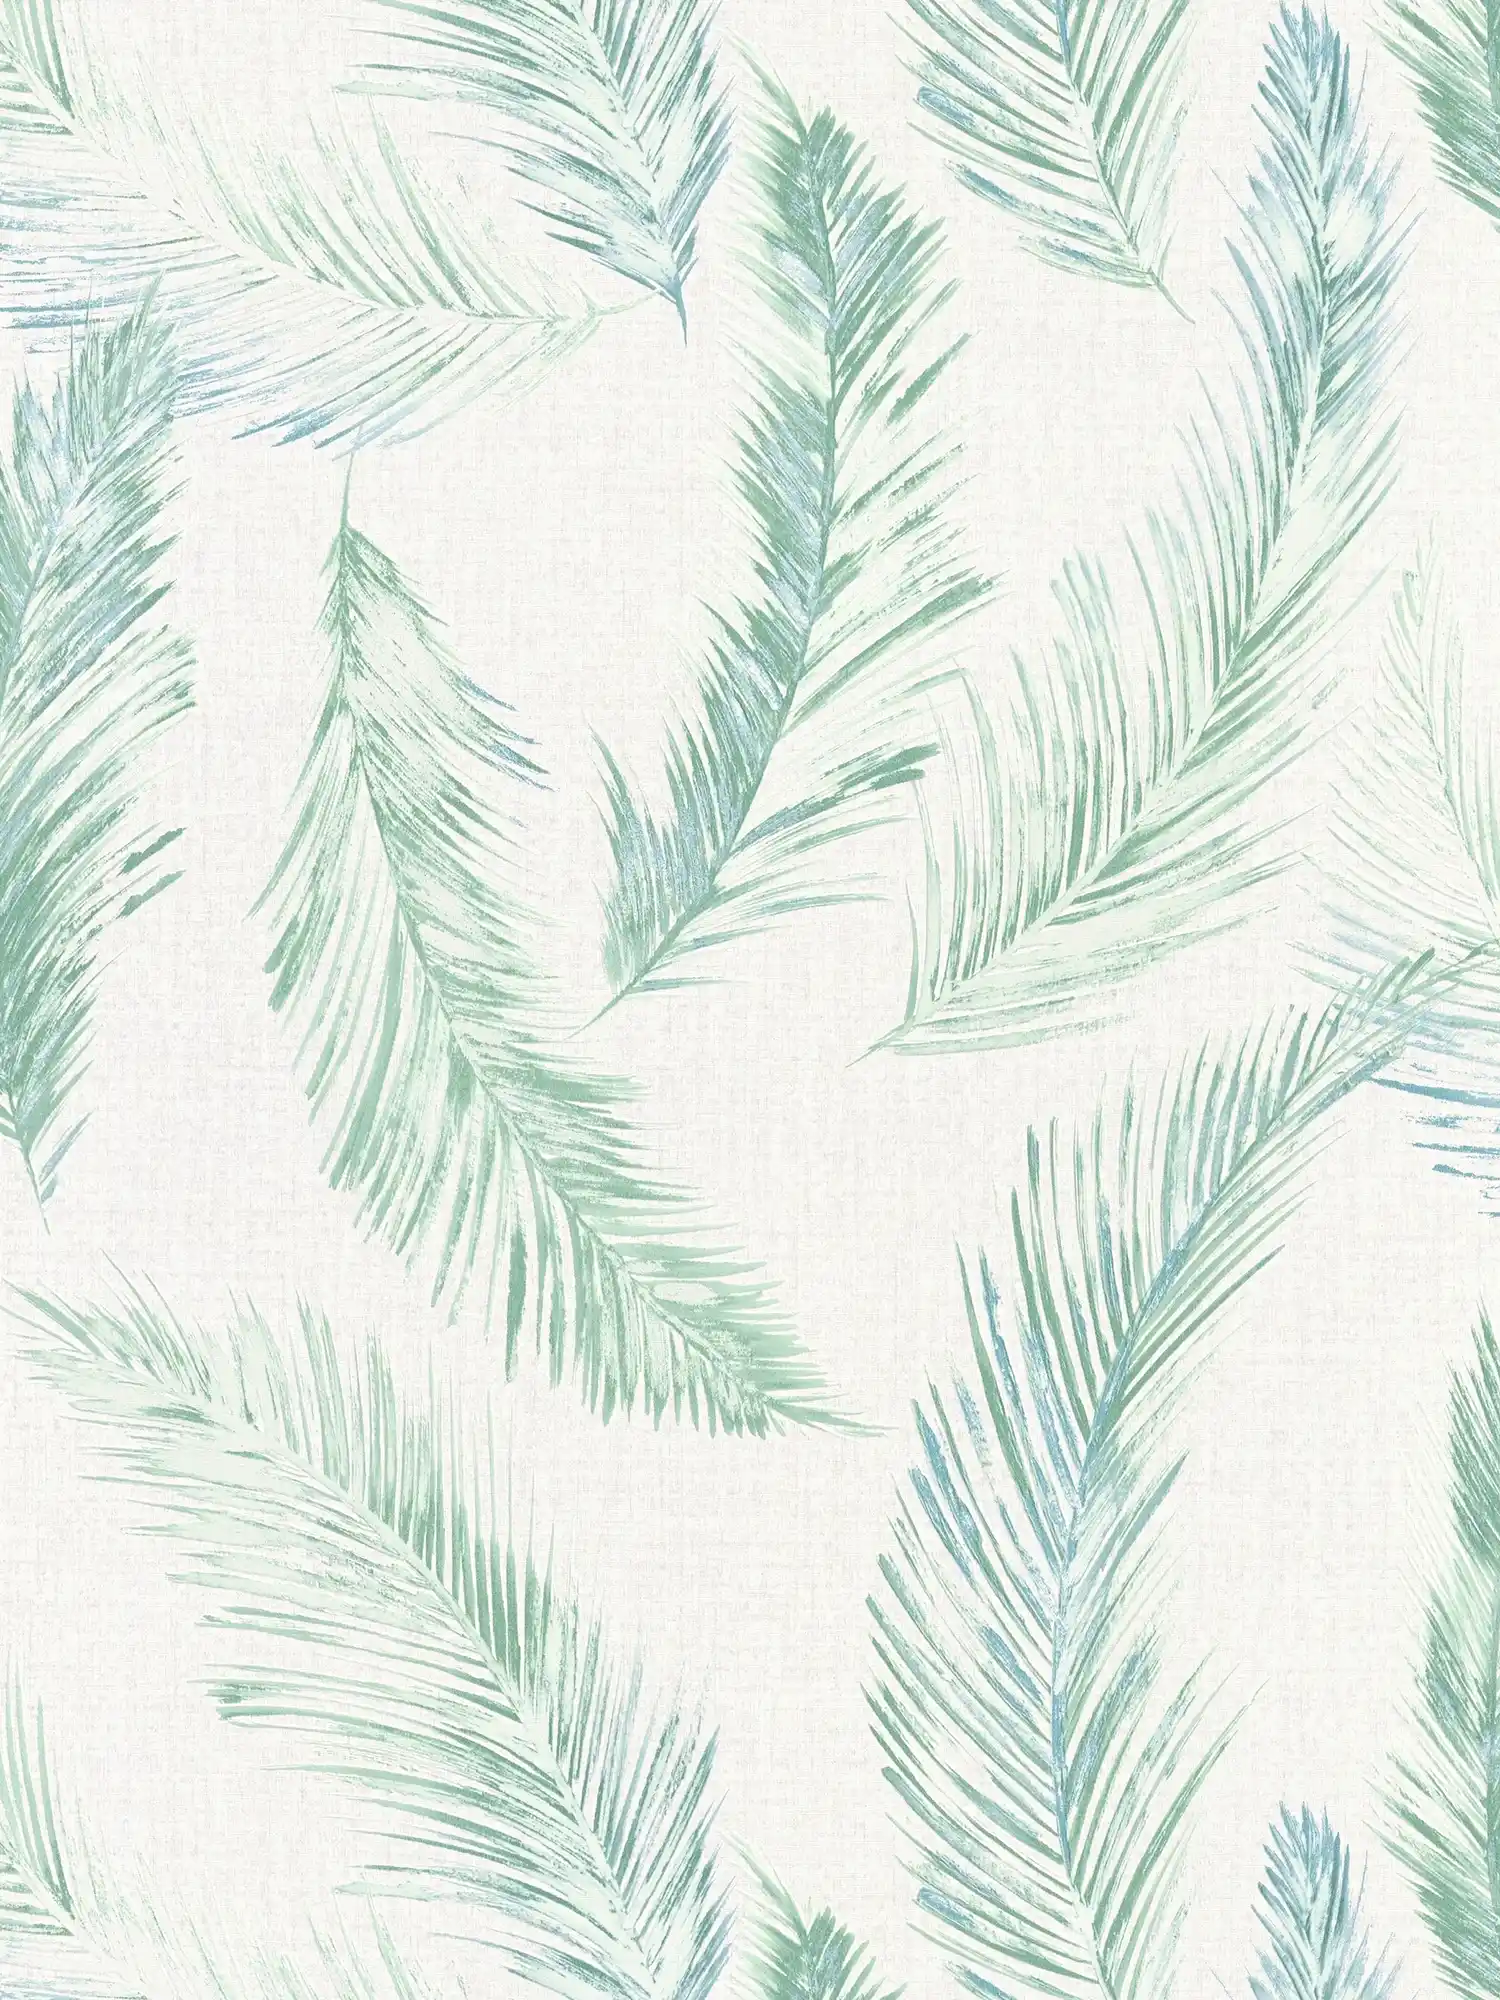 Non-woven wallpaper feather design in watercolour style - blue, green
